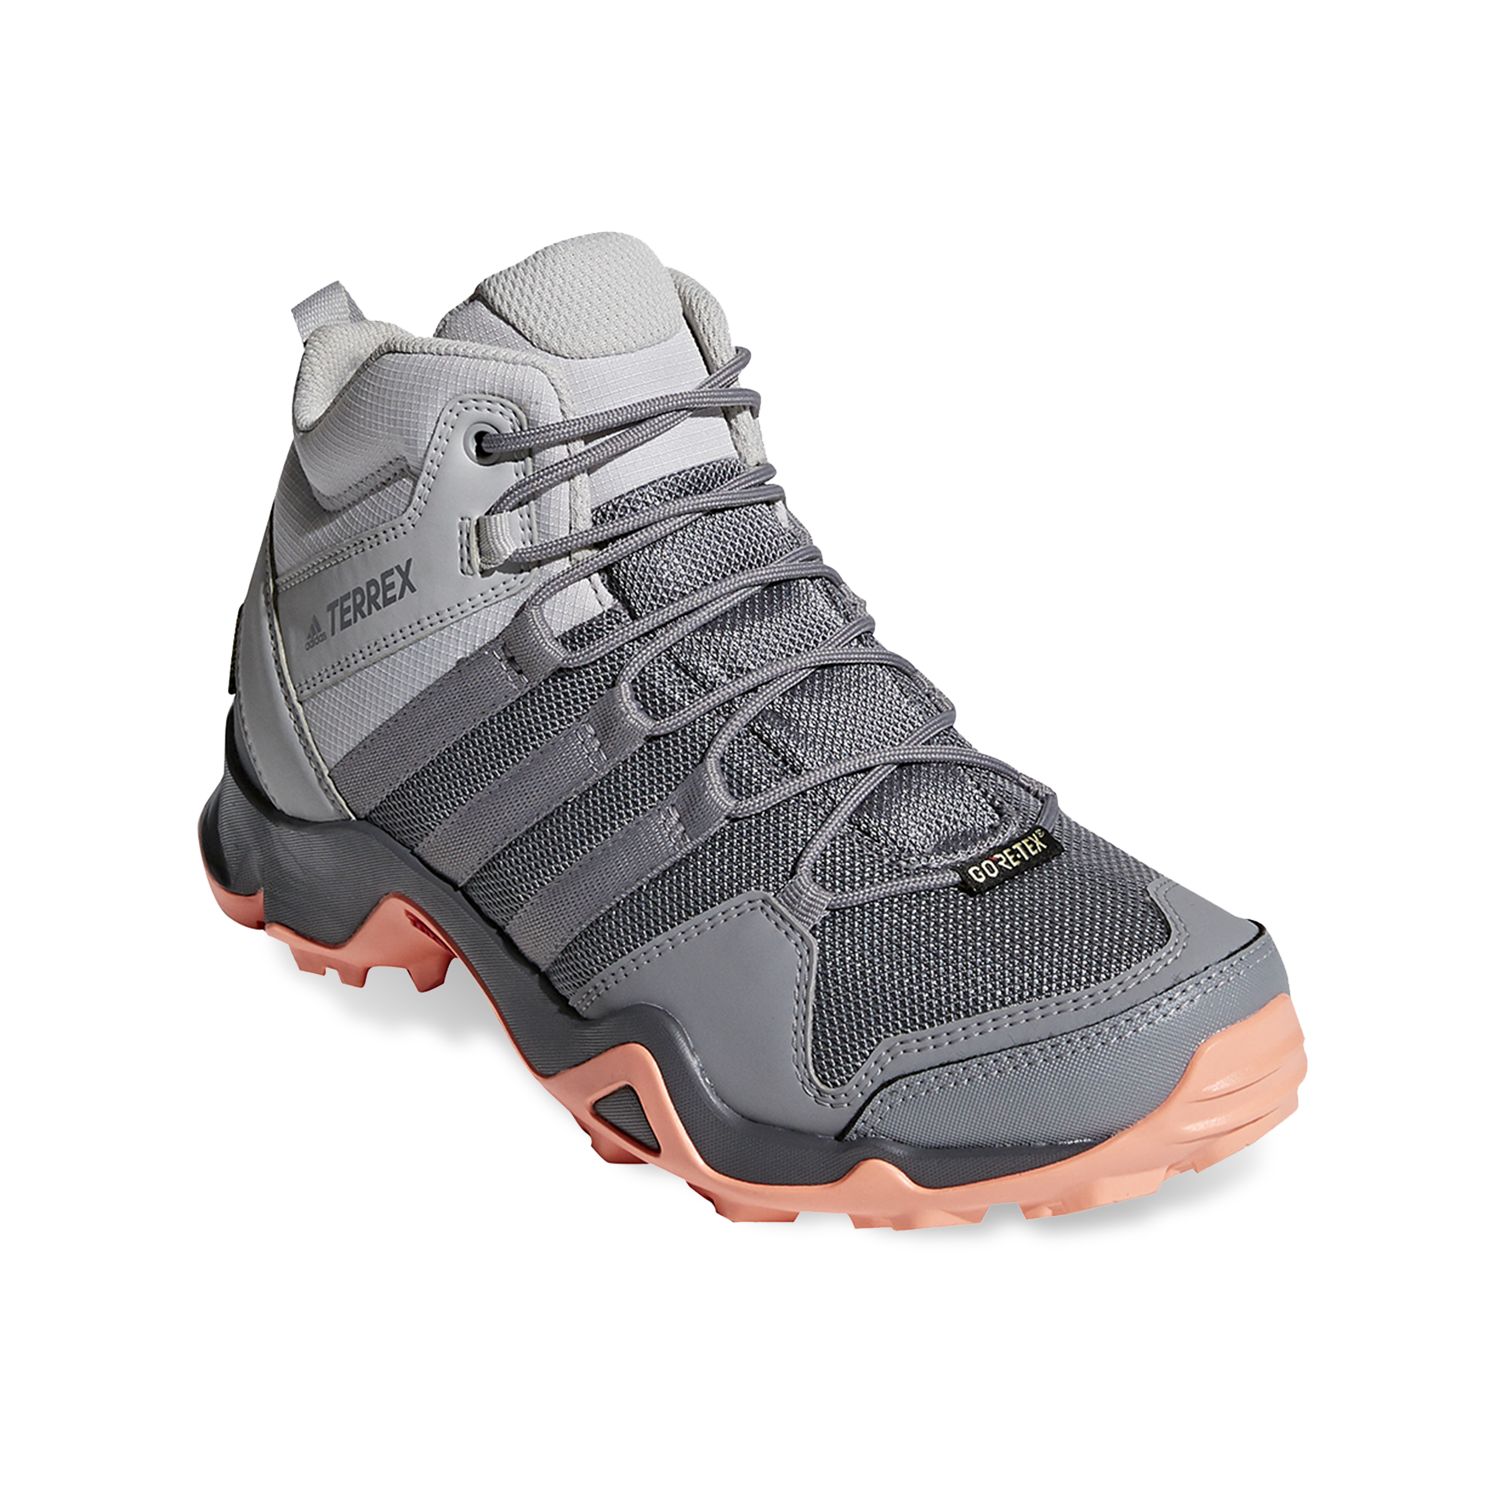 adidas terrex ax2r mid gtx hiking boots